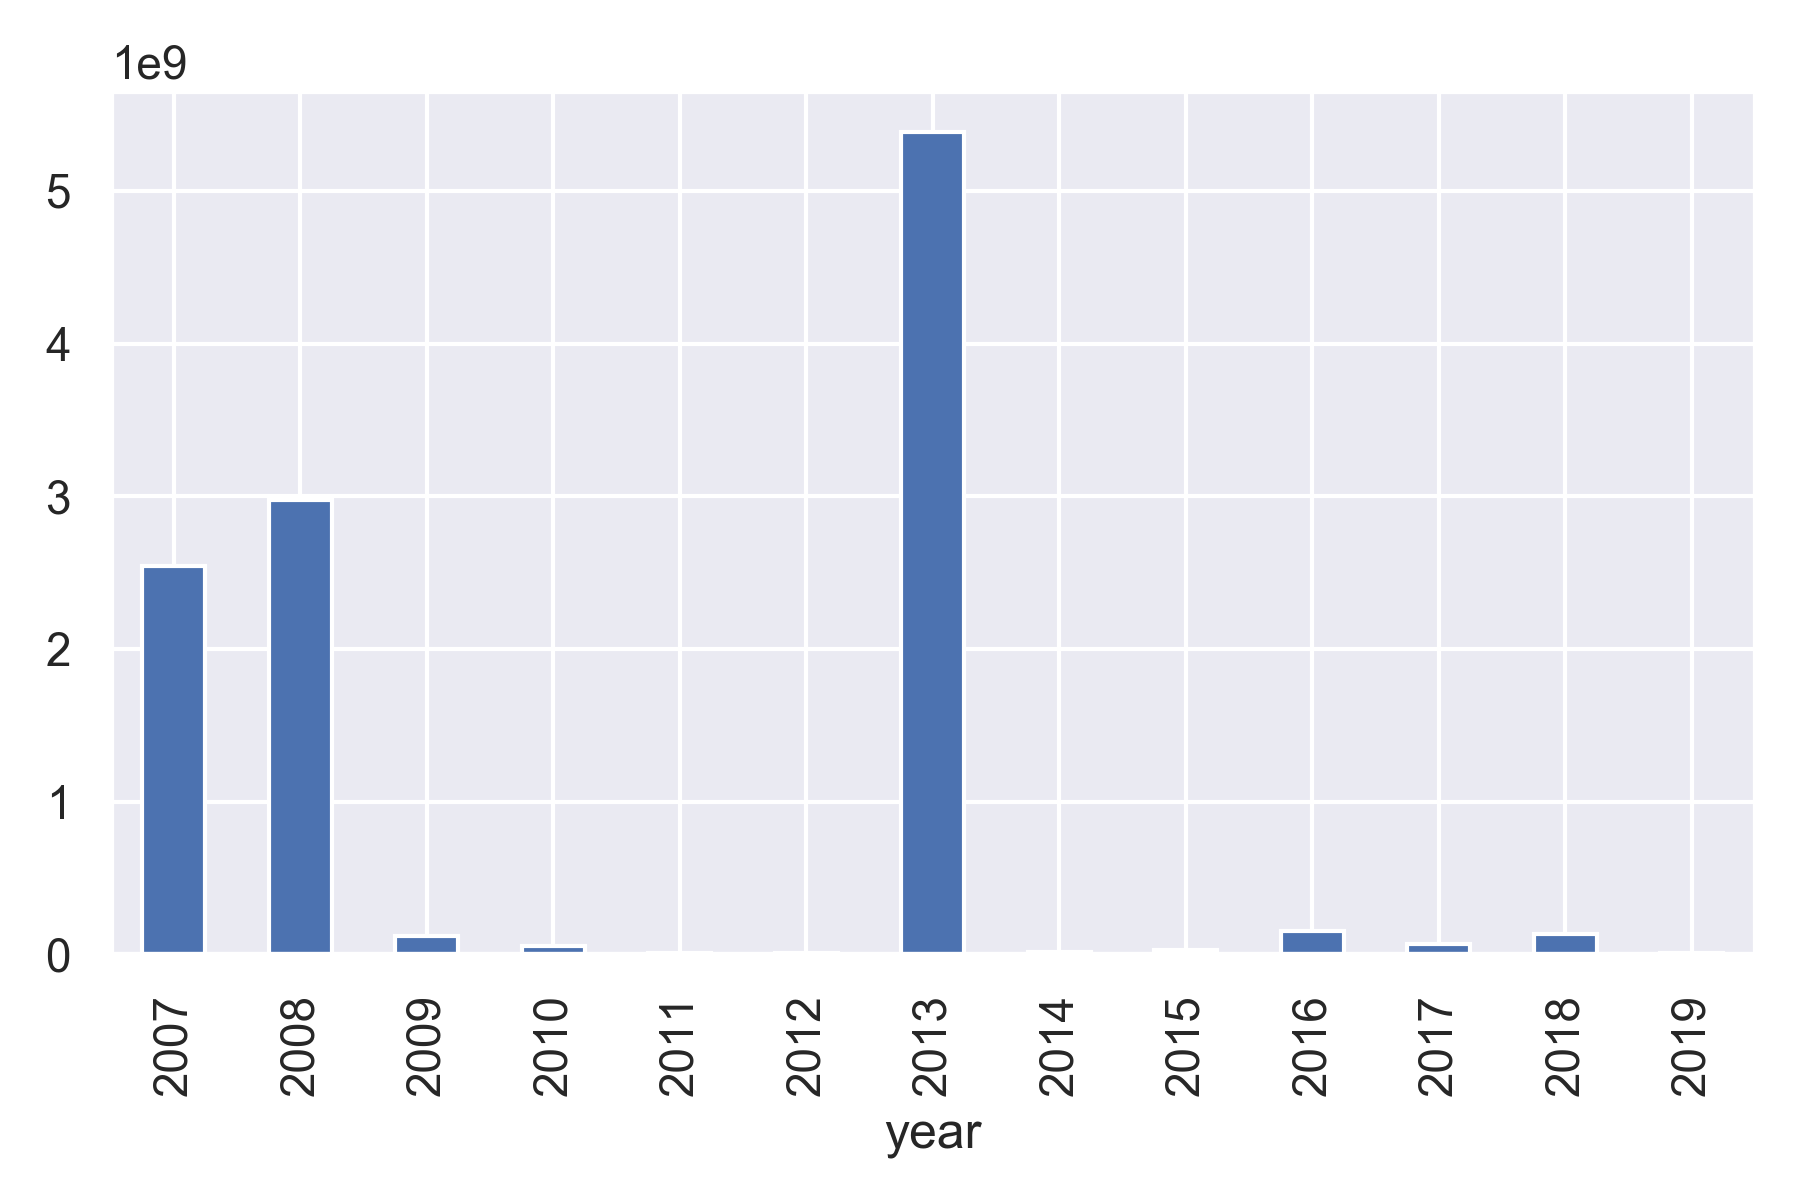 Figure 2: Amount foriven per year